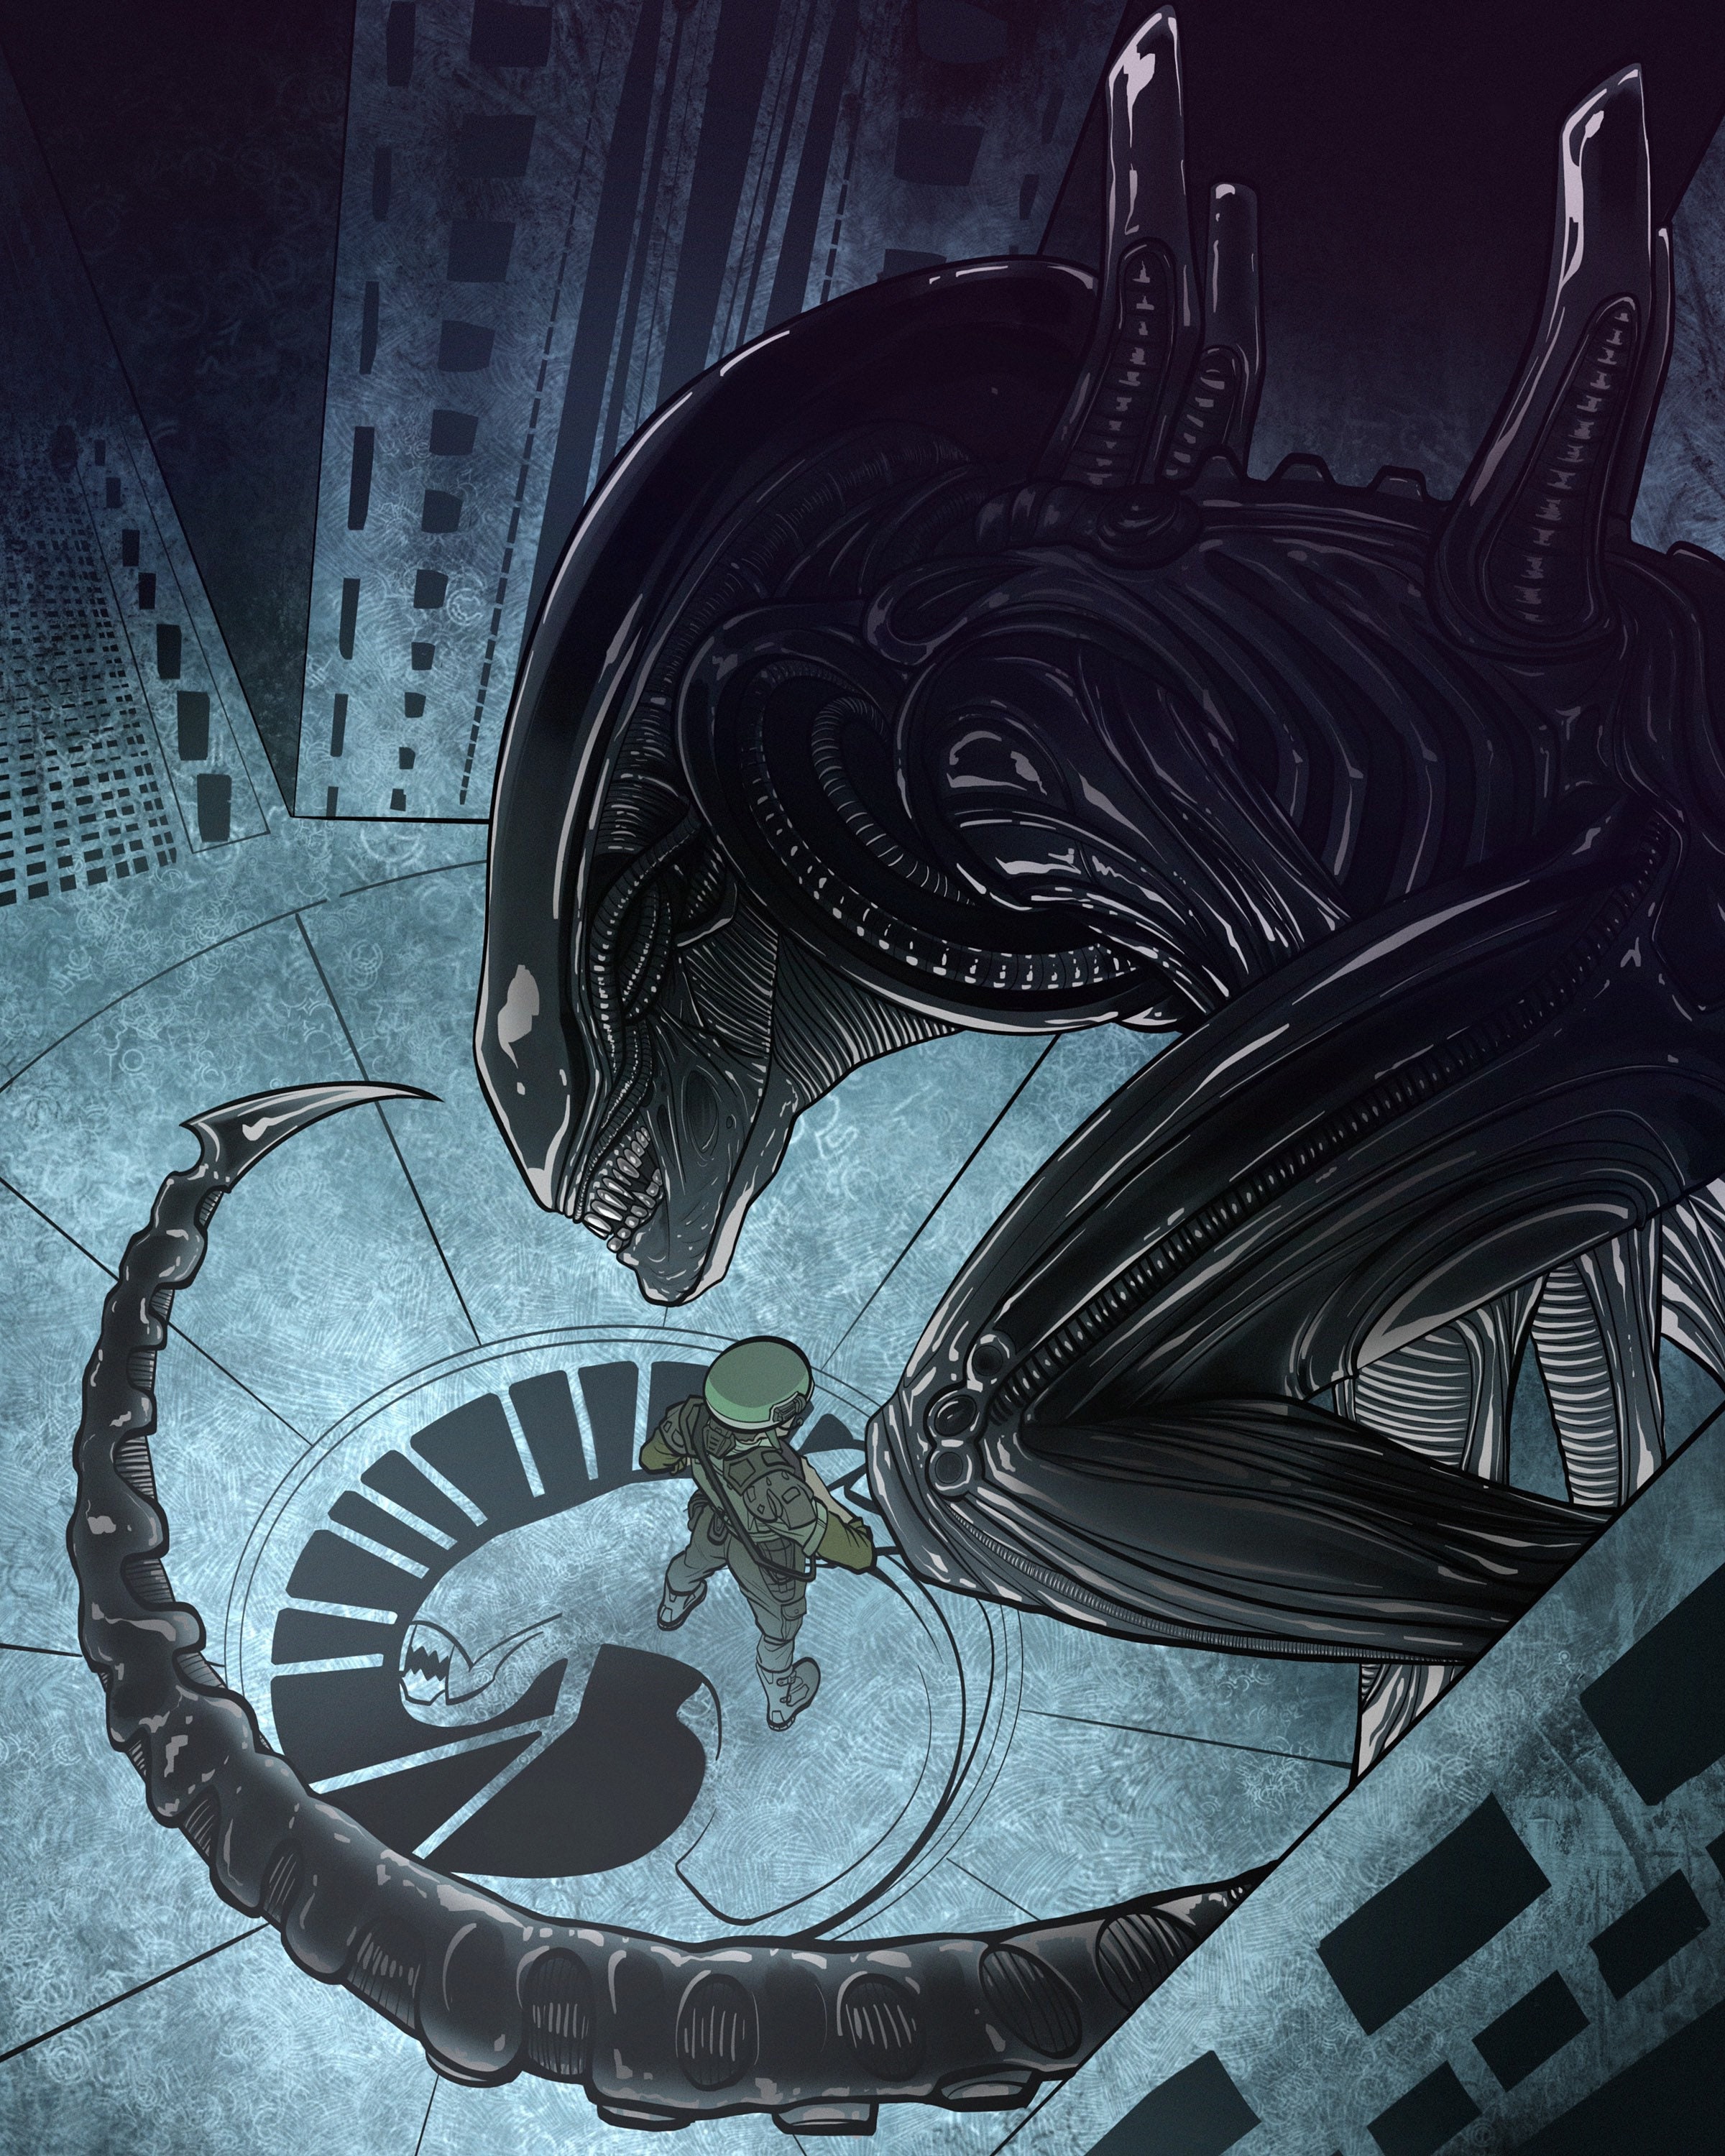 Alien predador  Xenomorph, Alien artwork, Predator alien